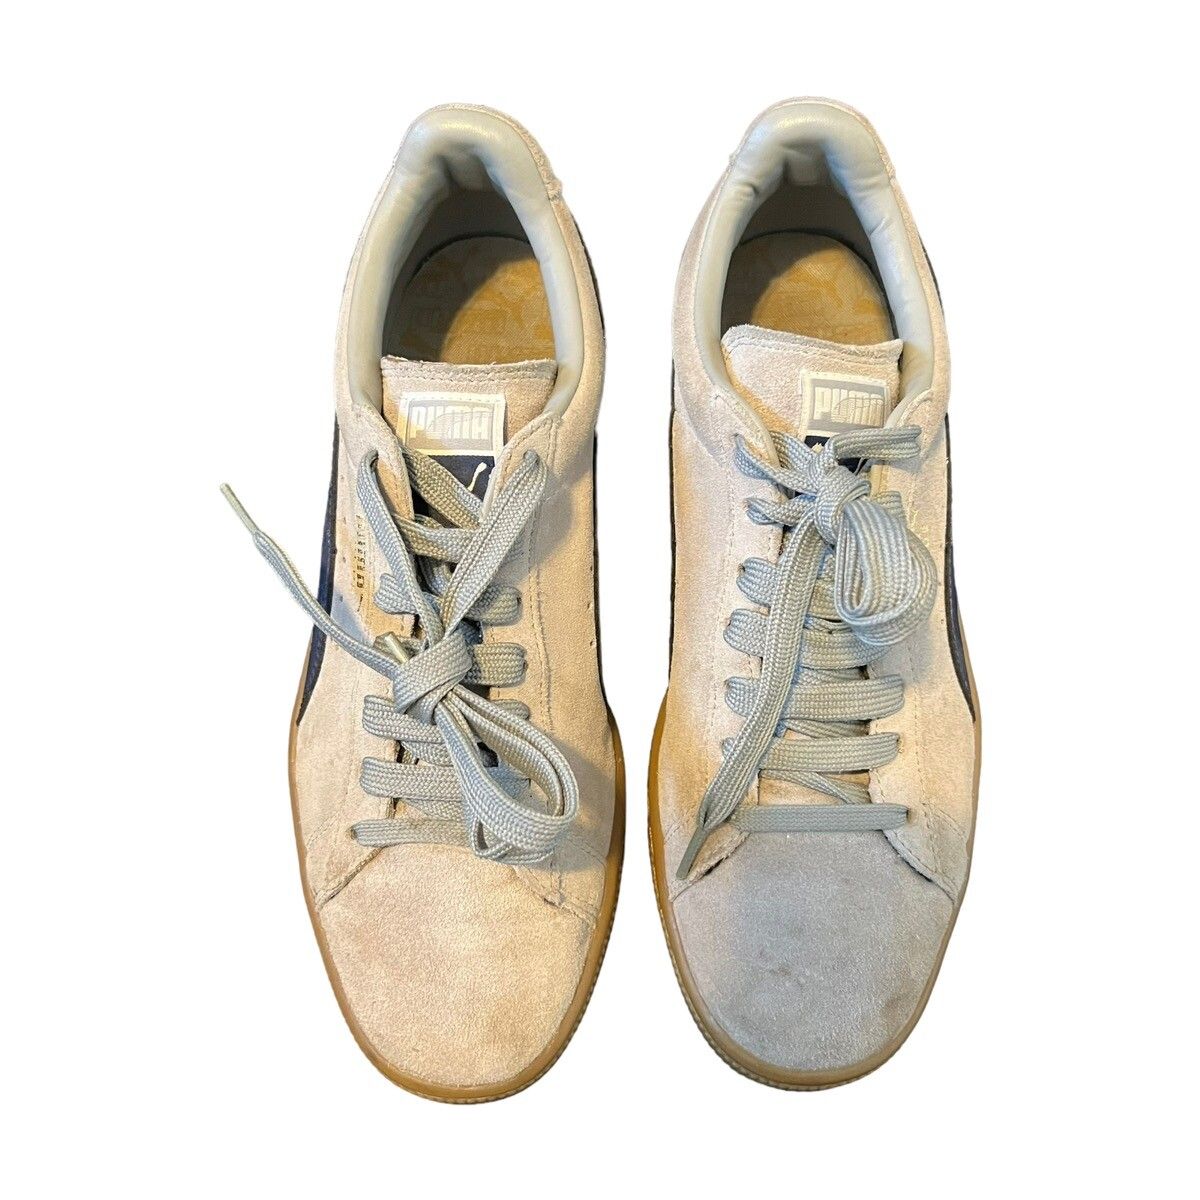 Vintage Puma Suede Classic XXI Sneakers Size US 8.5 / EU 41-42 - 4 Thumbnail